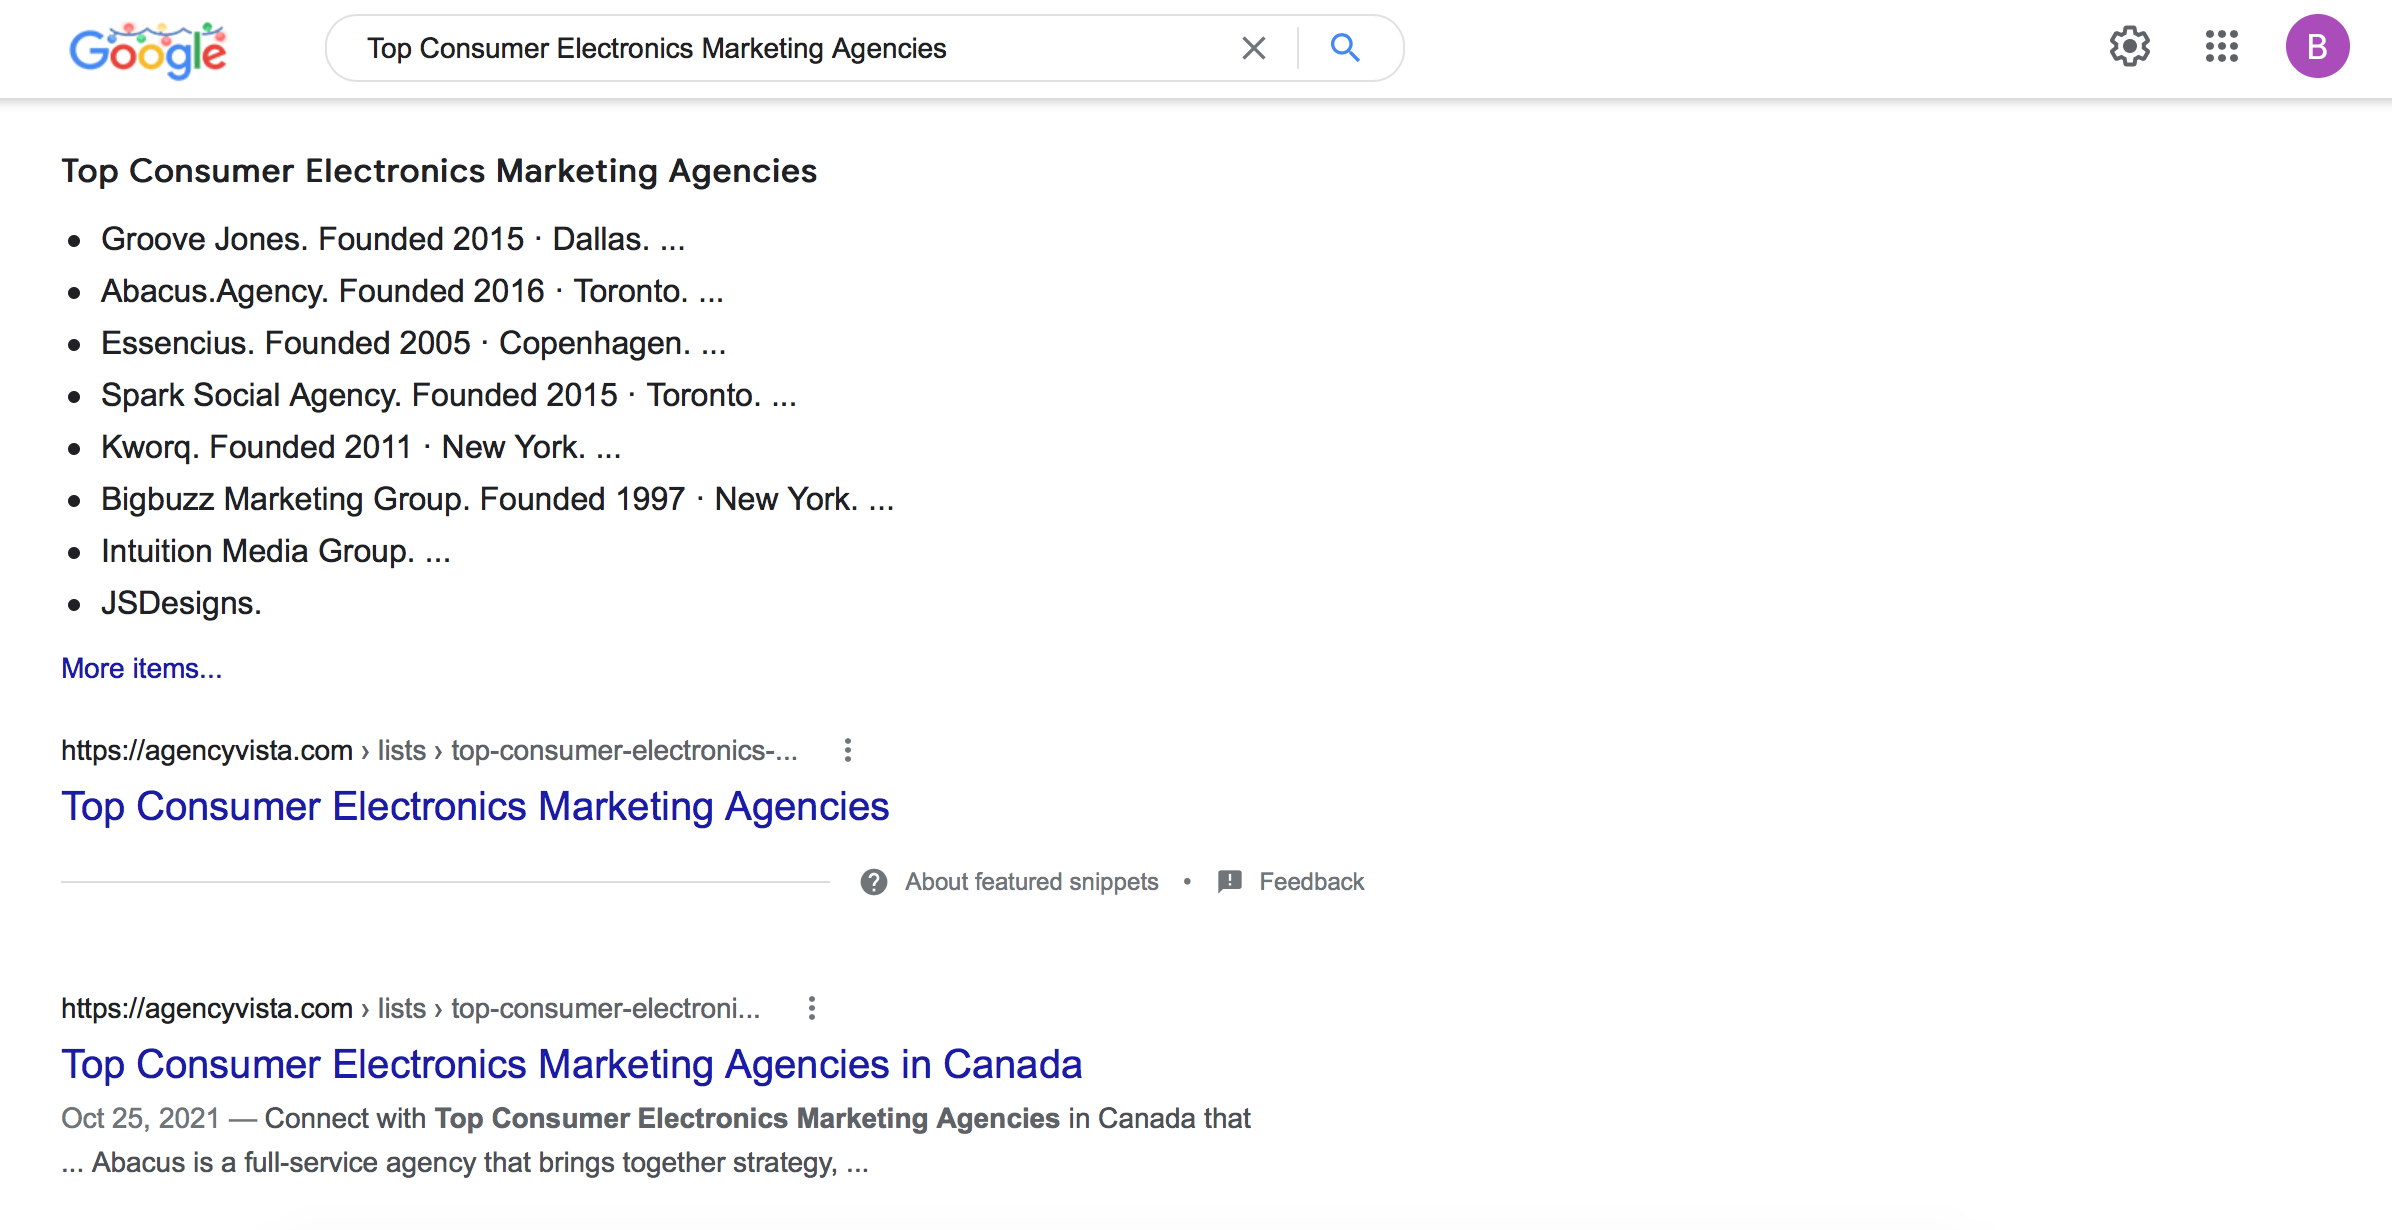 Google Search | Agency Vista's Top Consumer Electronics Marketing Agencies